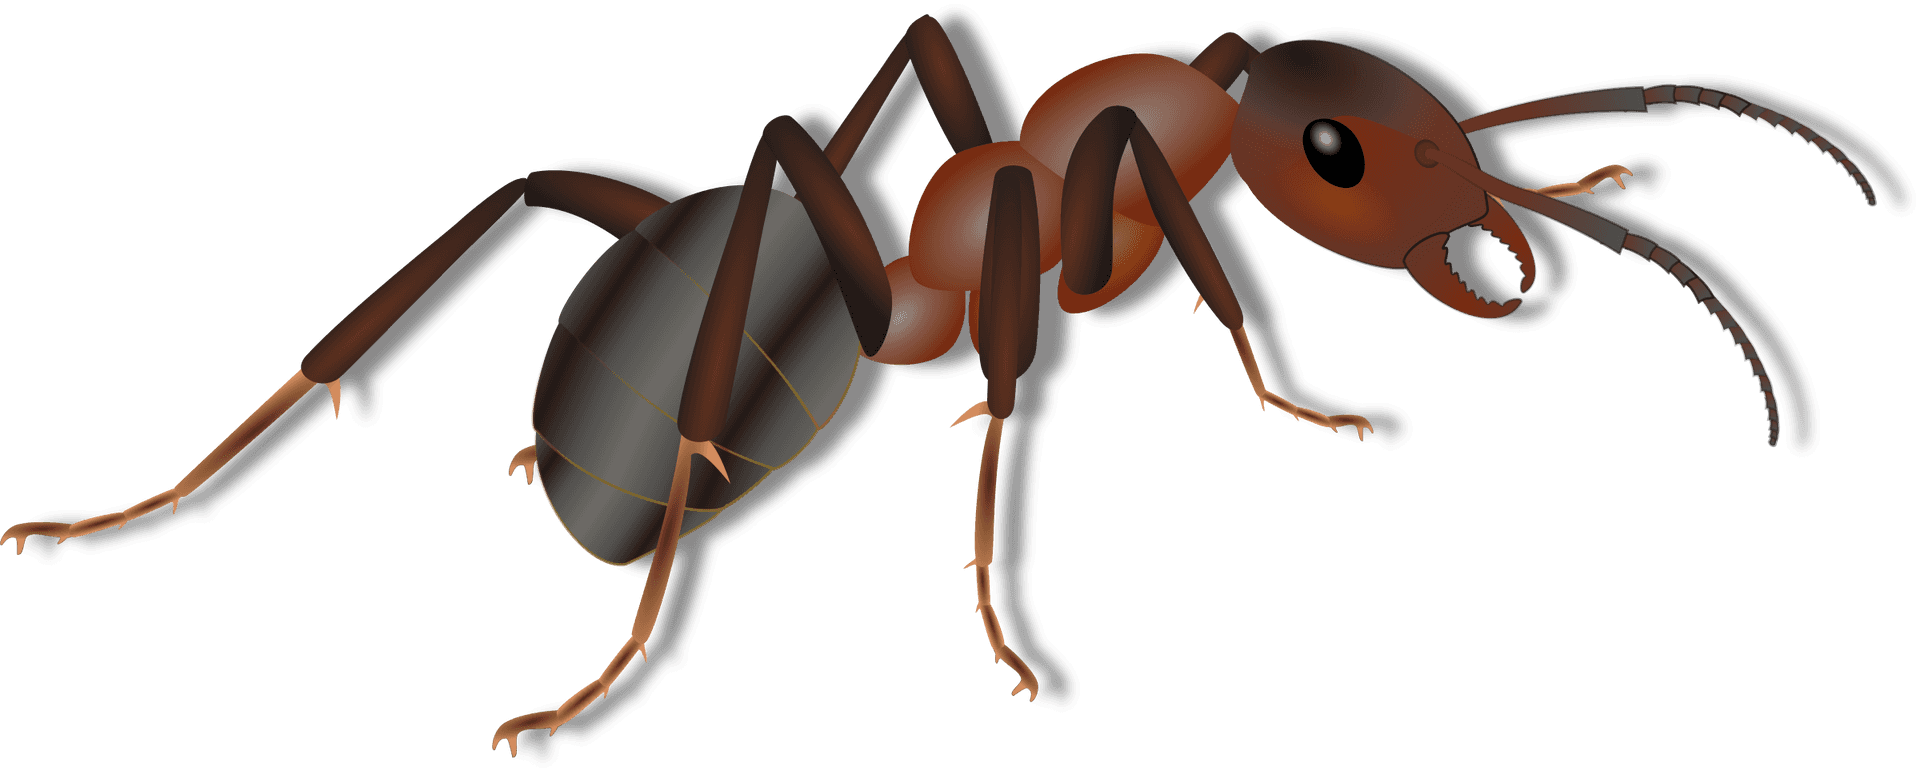 Detailed Ant Illustration PNG